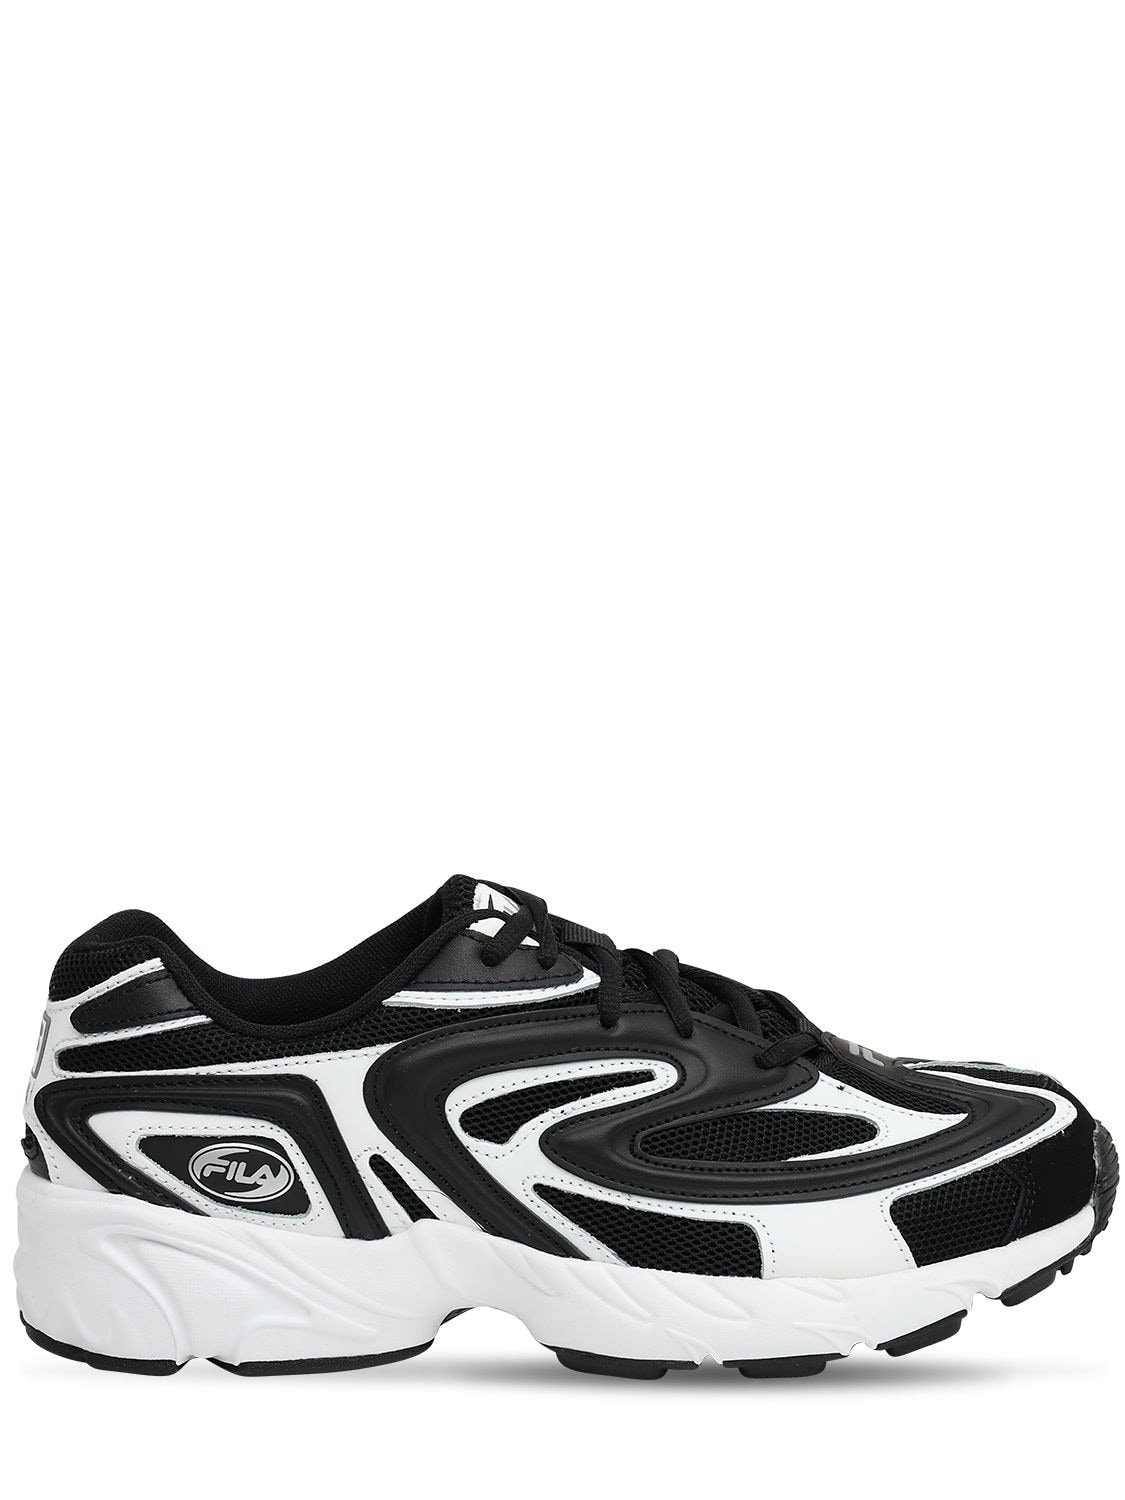 Buy Fila Chunky Sneakers - White for 